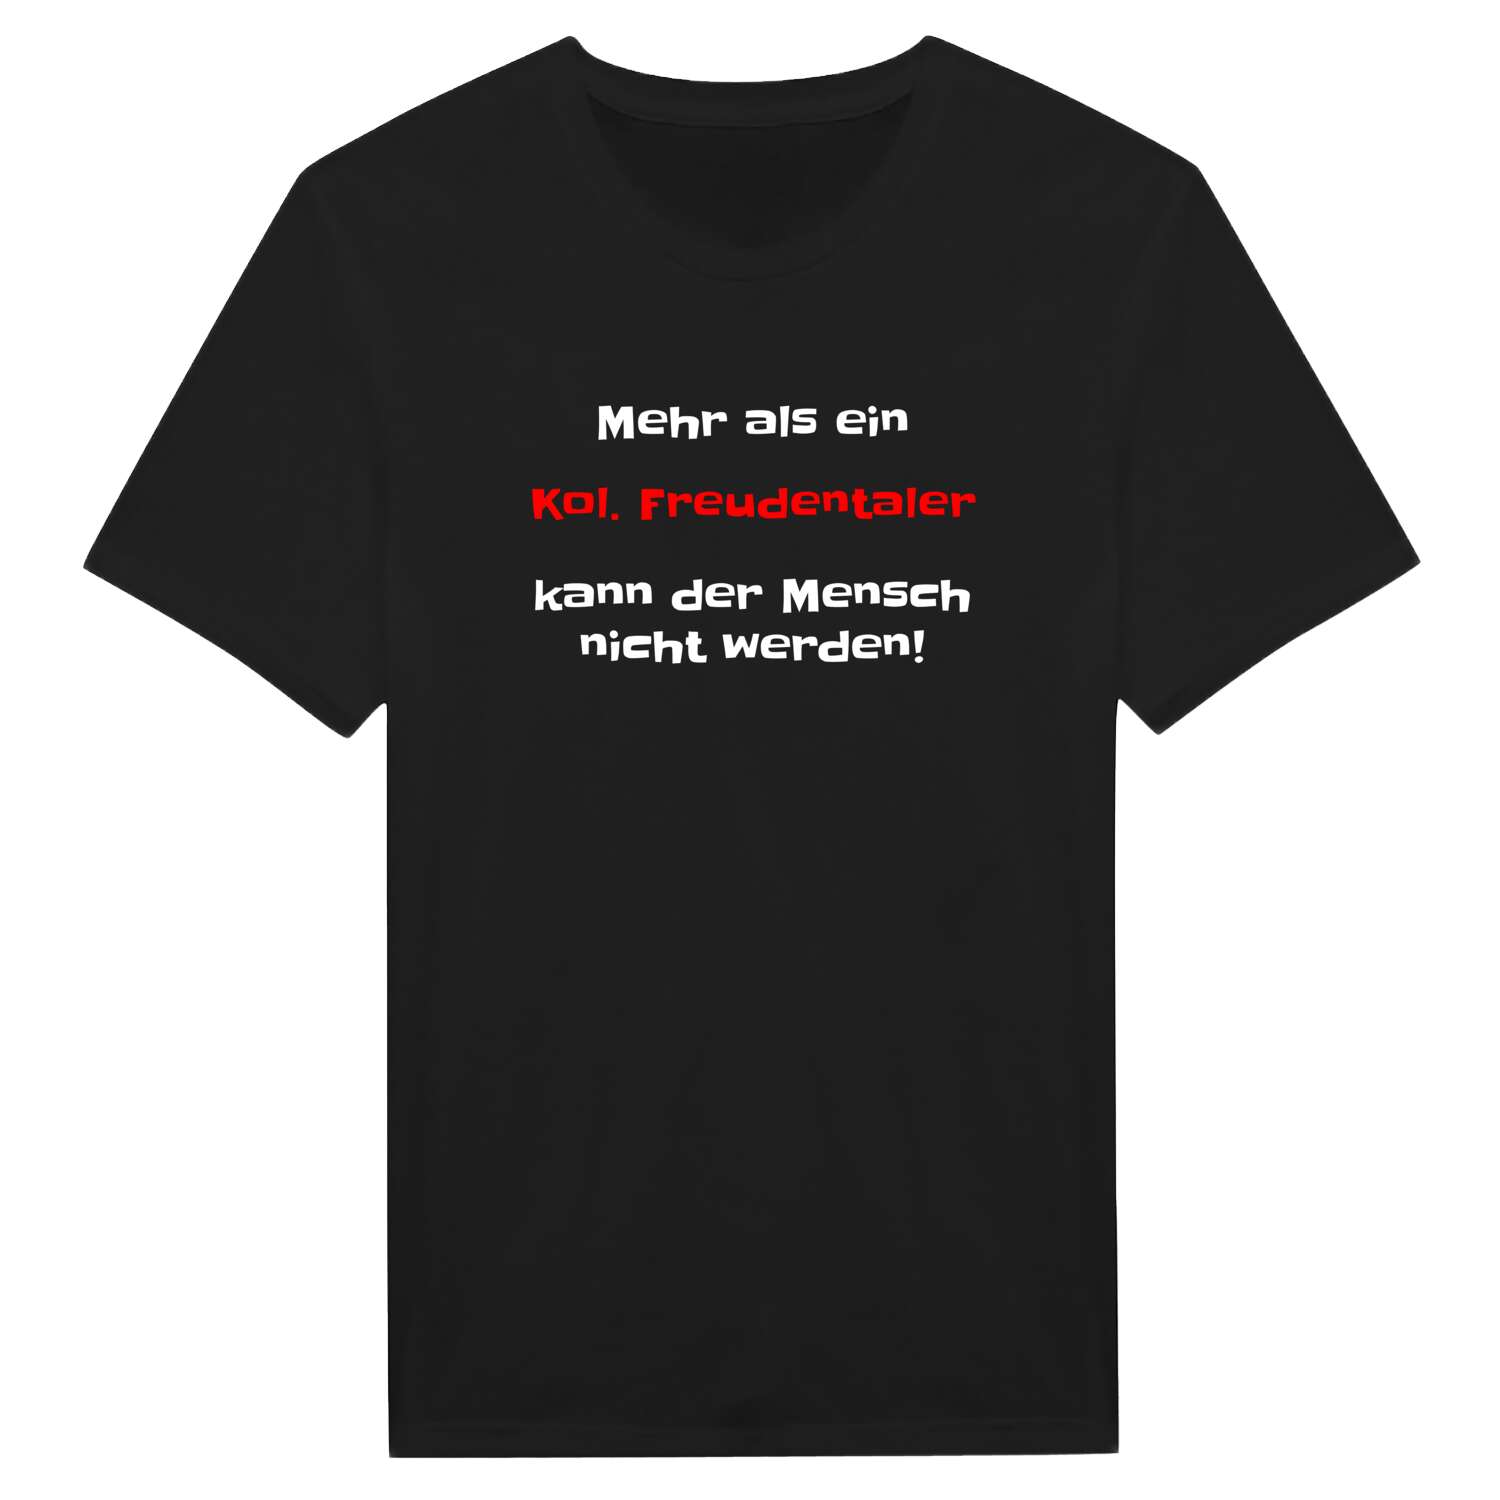 Kol. Freudental T-Shirt »Mehr als ein«